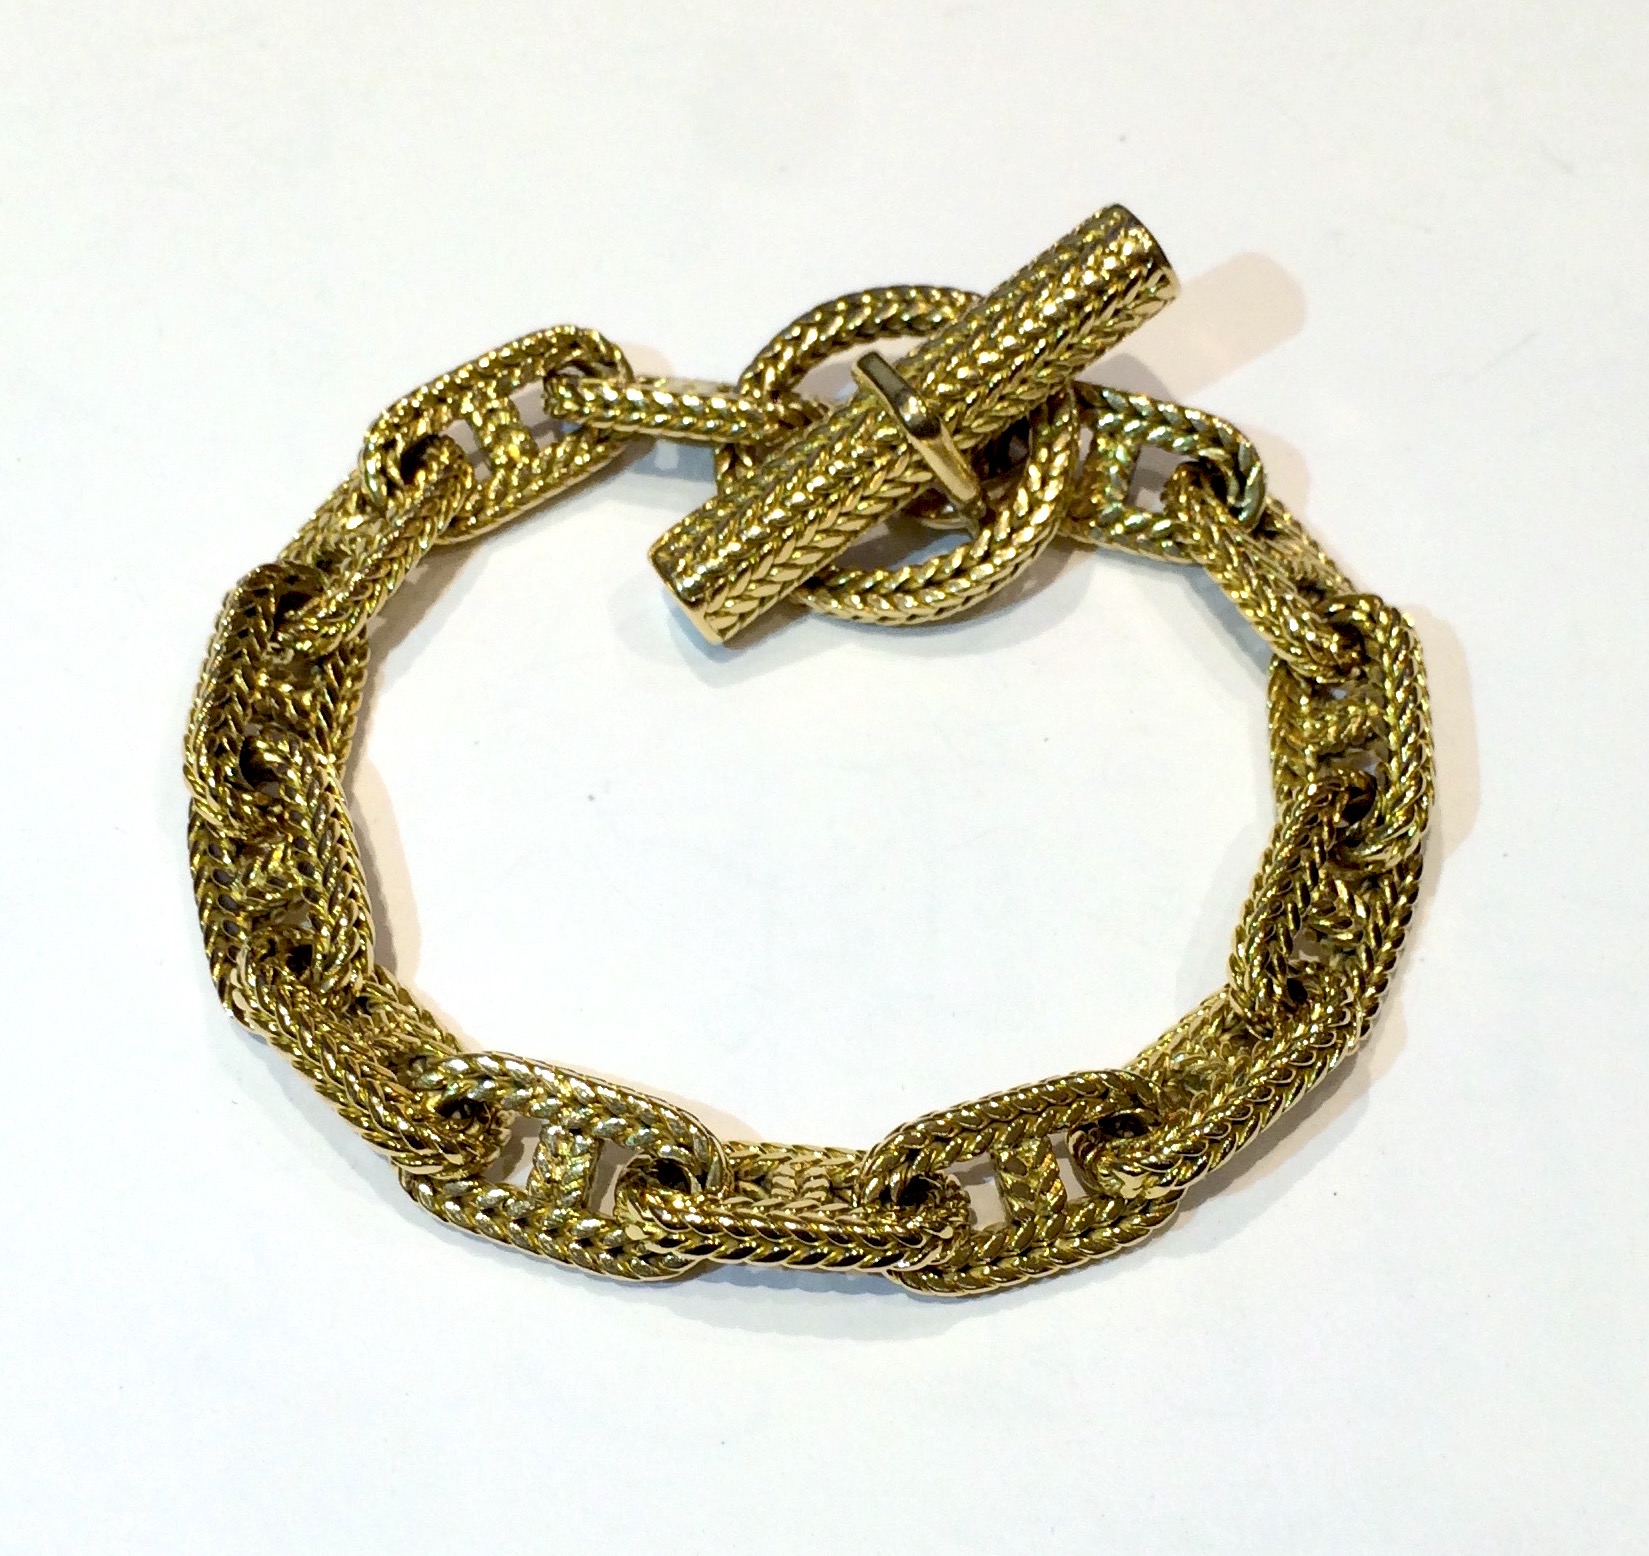 Hermes / Georges L’Enfant 18K yellow gold braided “tresse” Chaine D’Ancre bracelet (medium size links), signed, c.1970’s